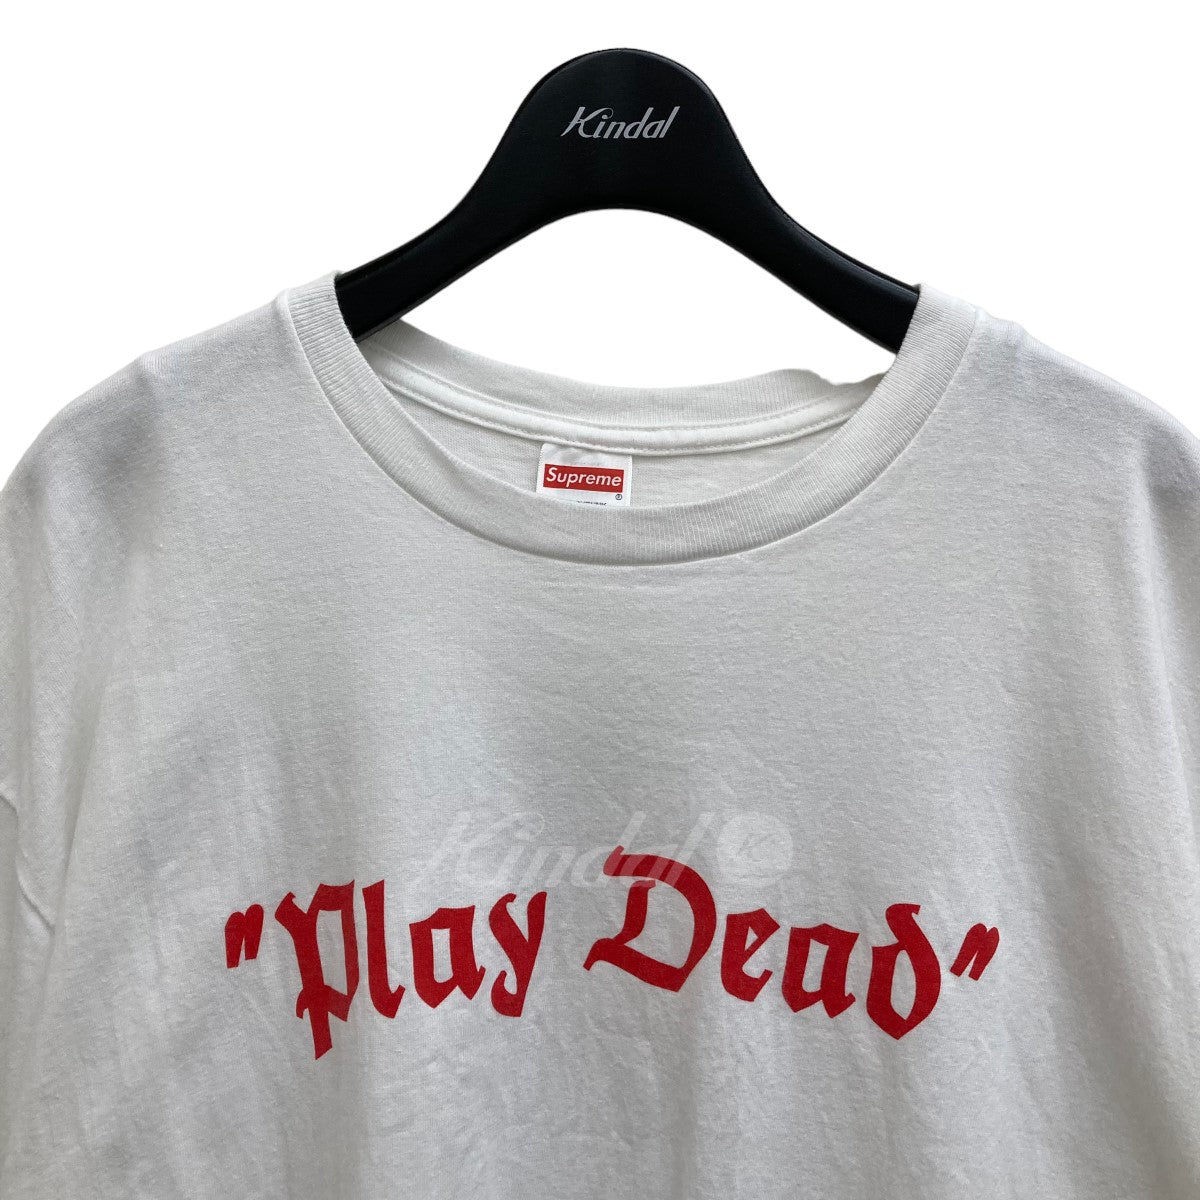 SUPREME(シュプリーム) Play Dead Tee Tシャツ